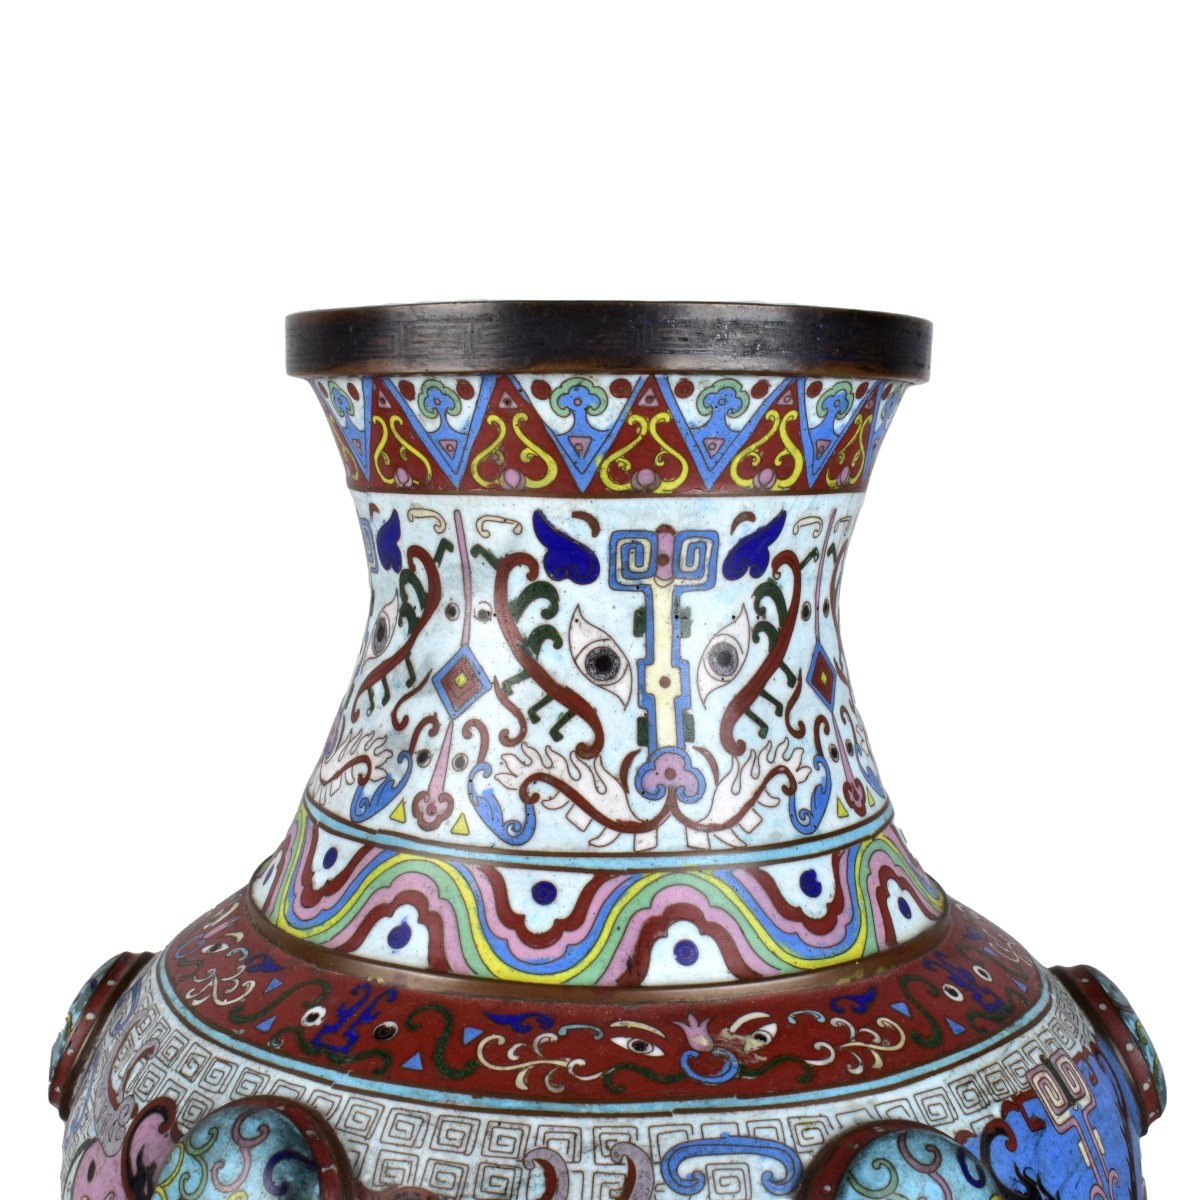 Large 19th C. Chinese Cloisonne Vase